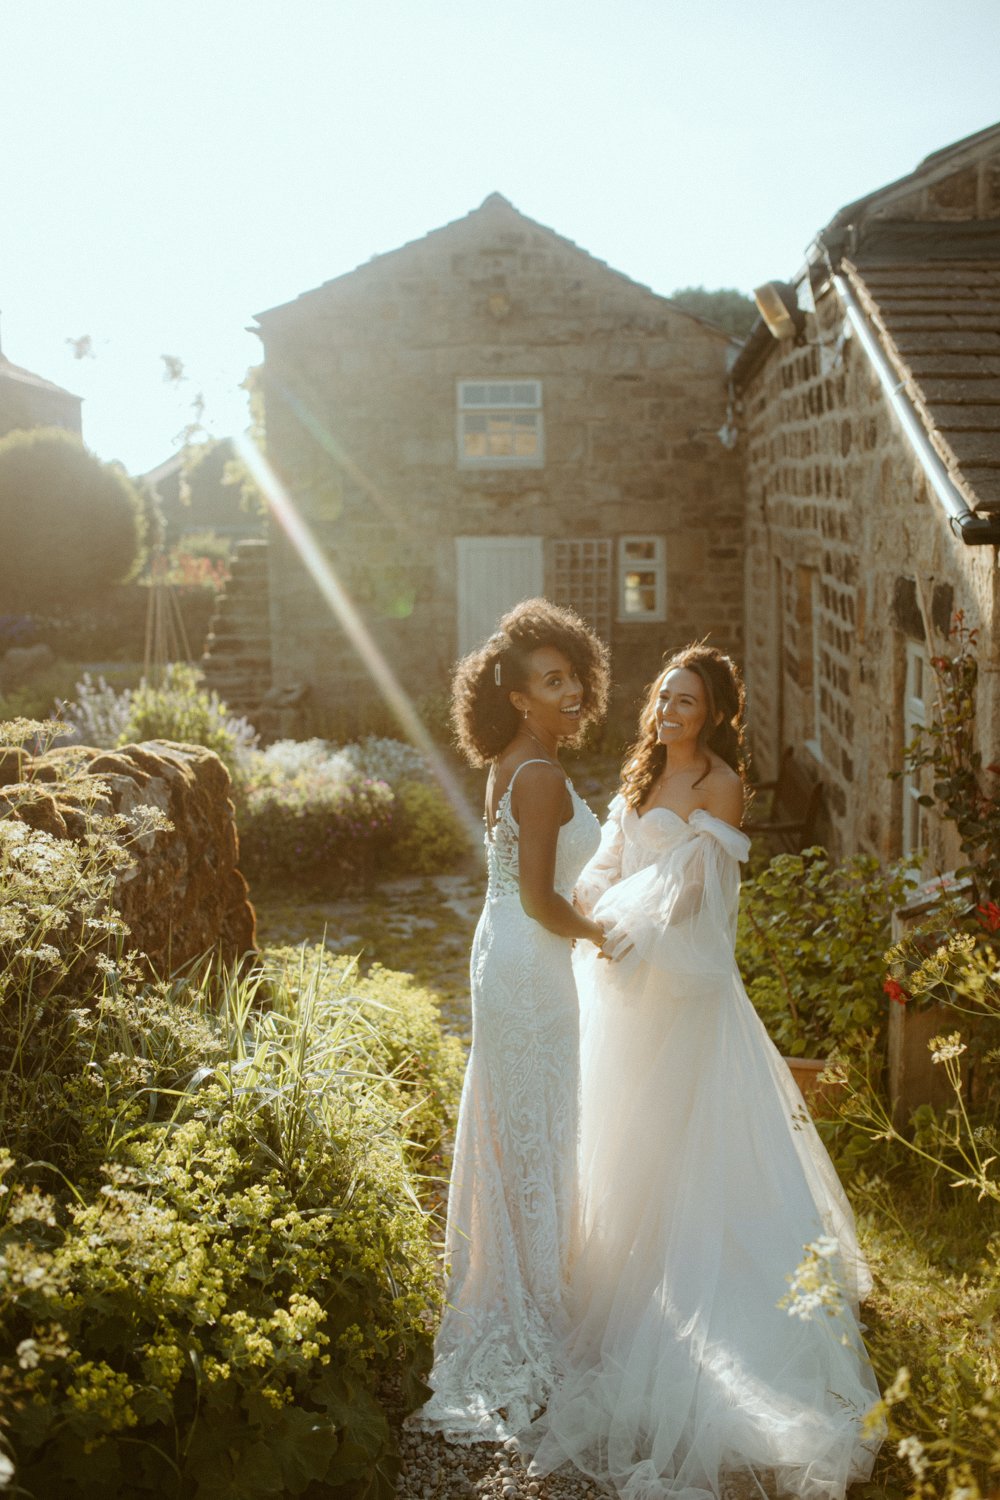 Ruth-Leanne-Chilli-Barn-Wedding-Darina-Stoda-Photography-133.jpg